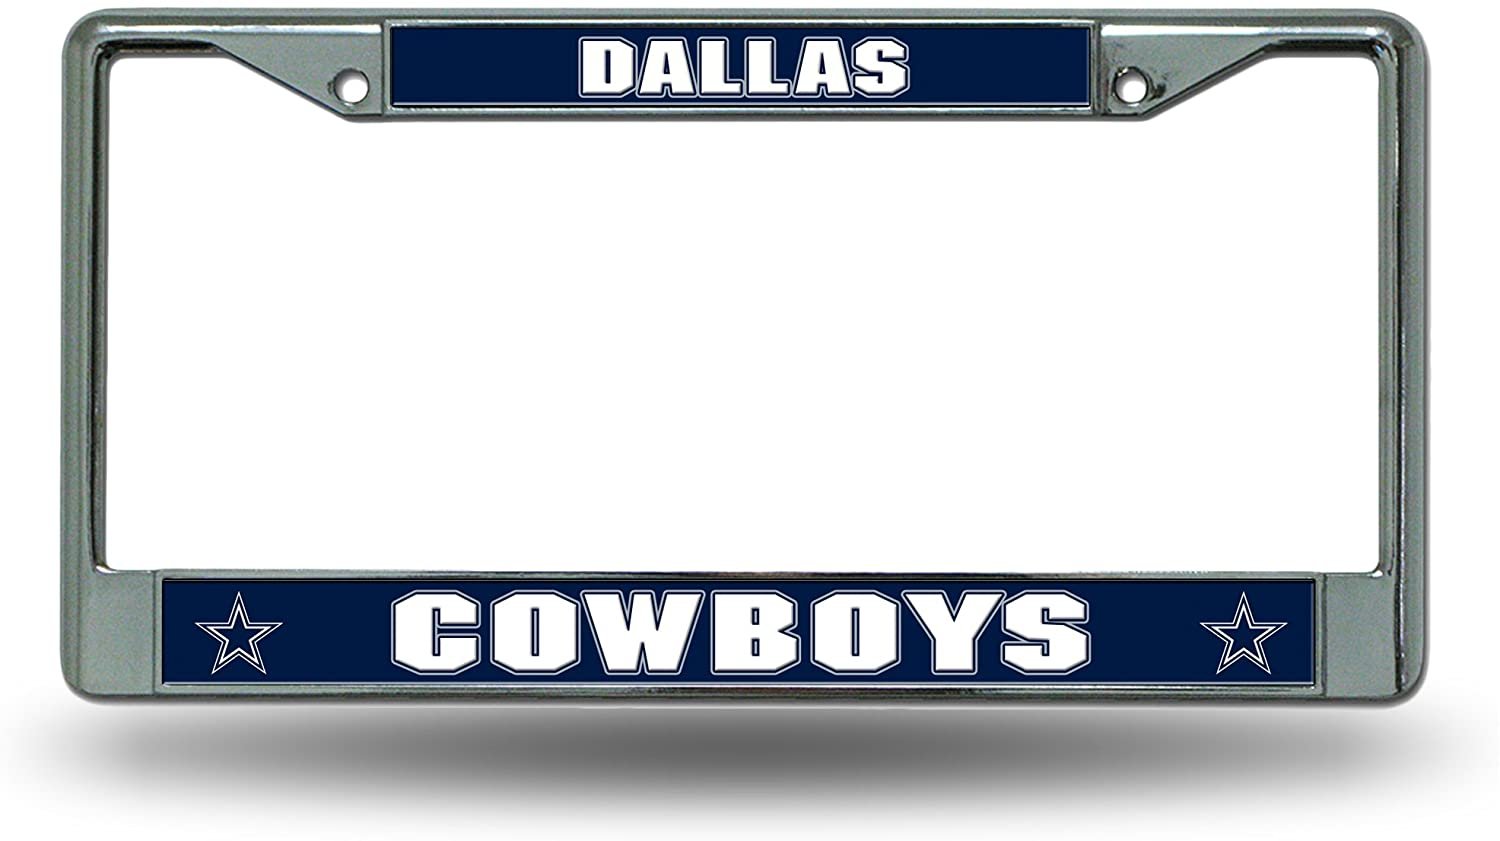 Dallas Cowboys Metal License Plate Frame Chrome Tag Cover 12x6 Inch